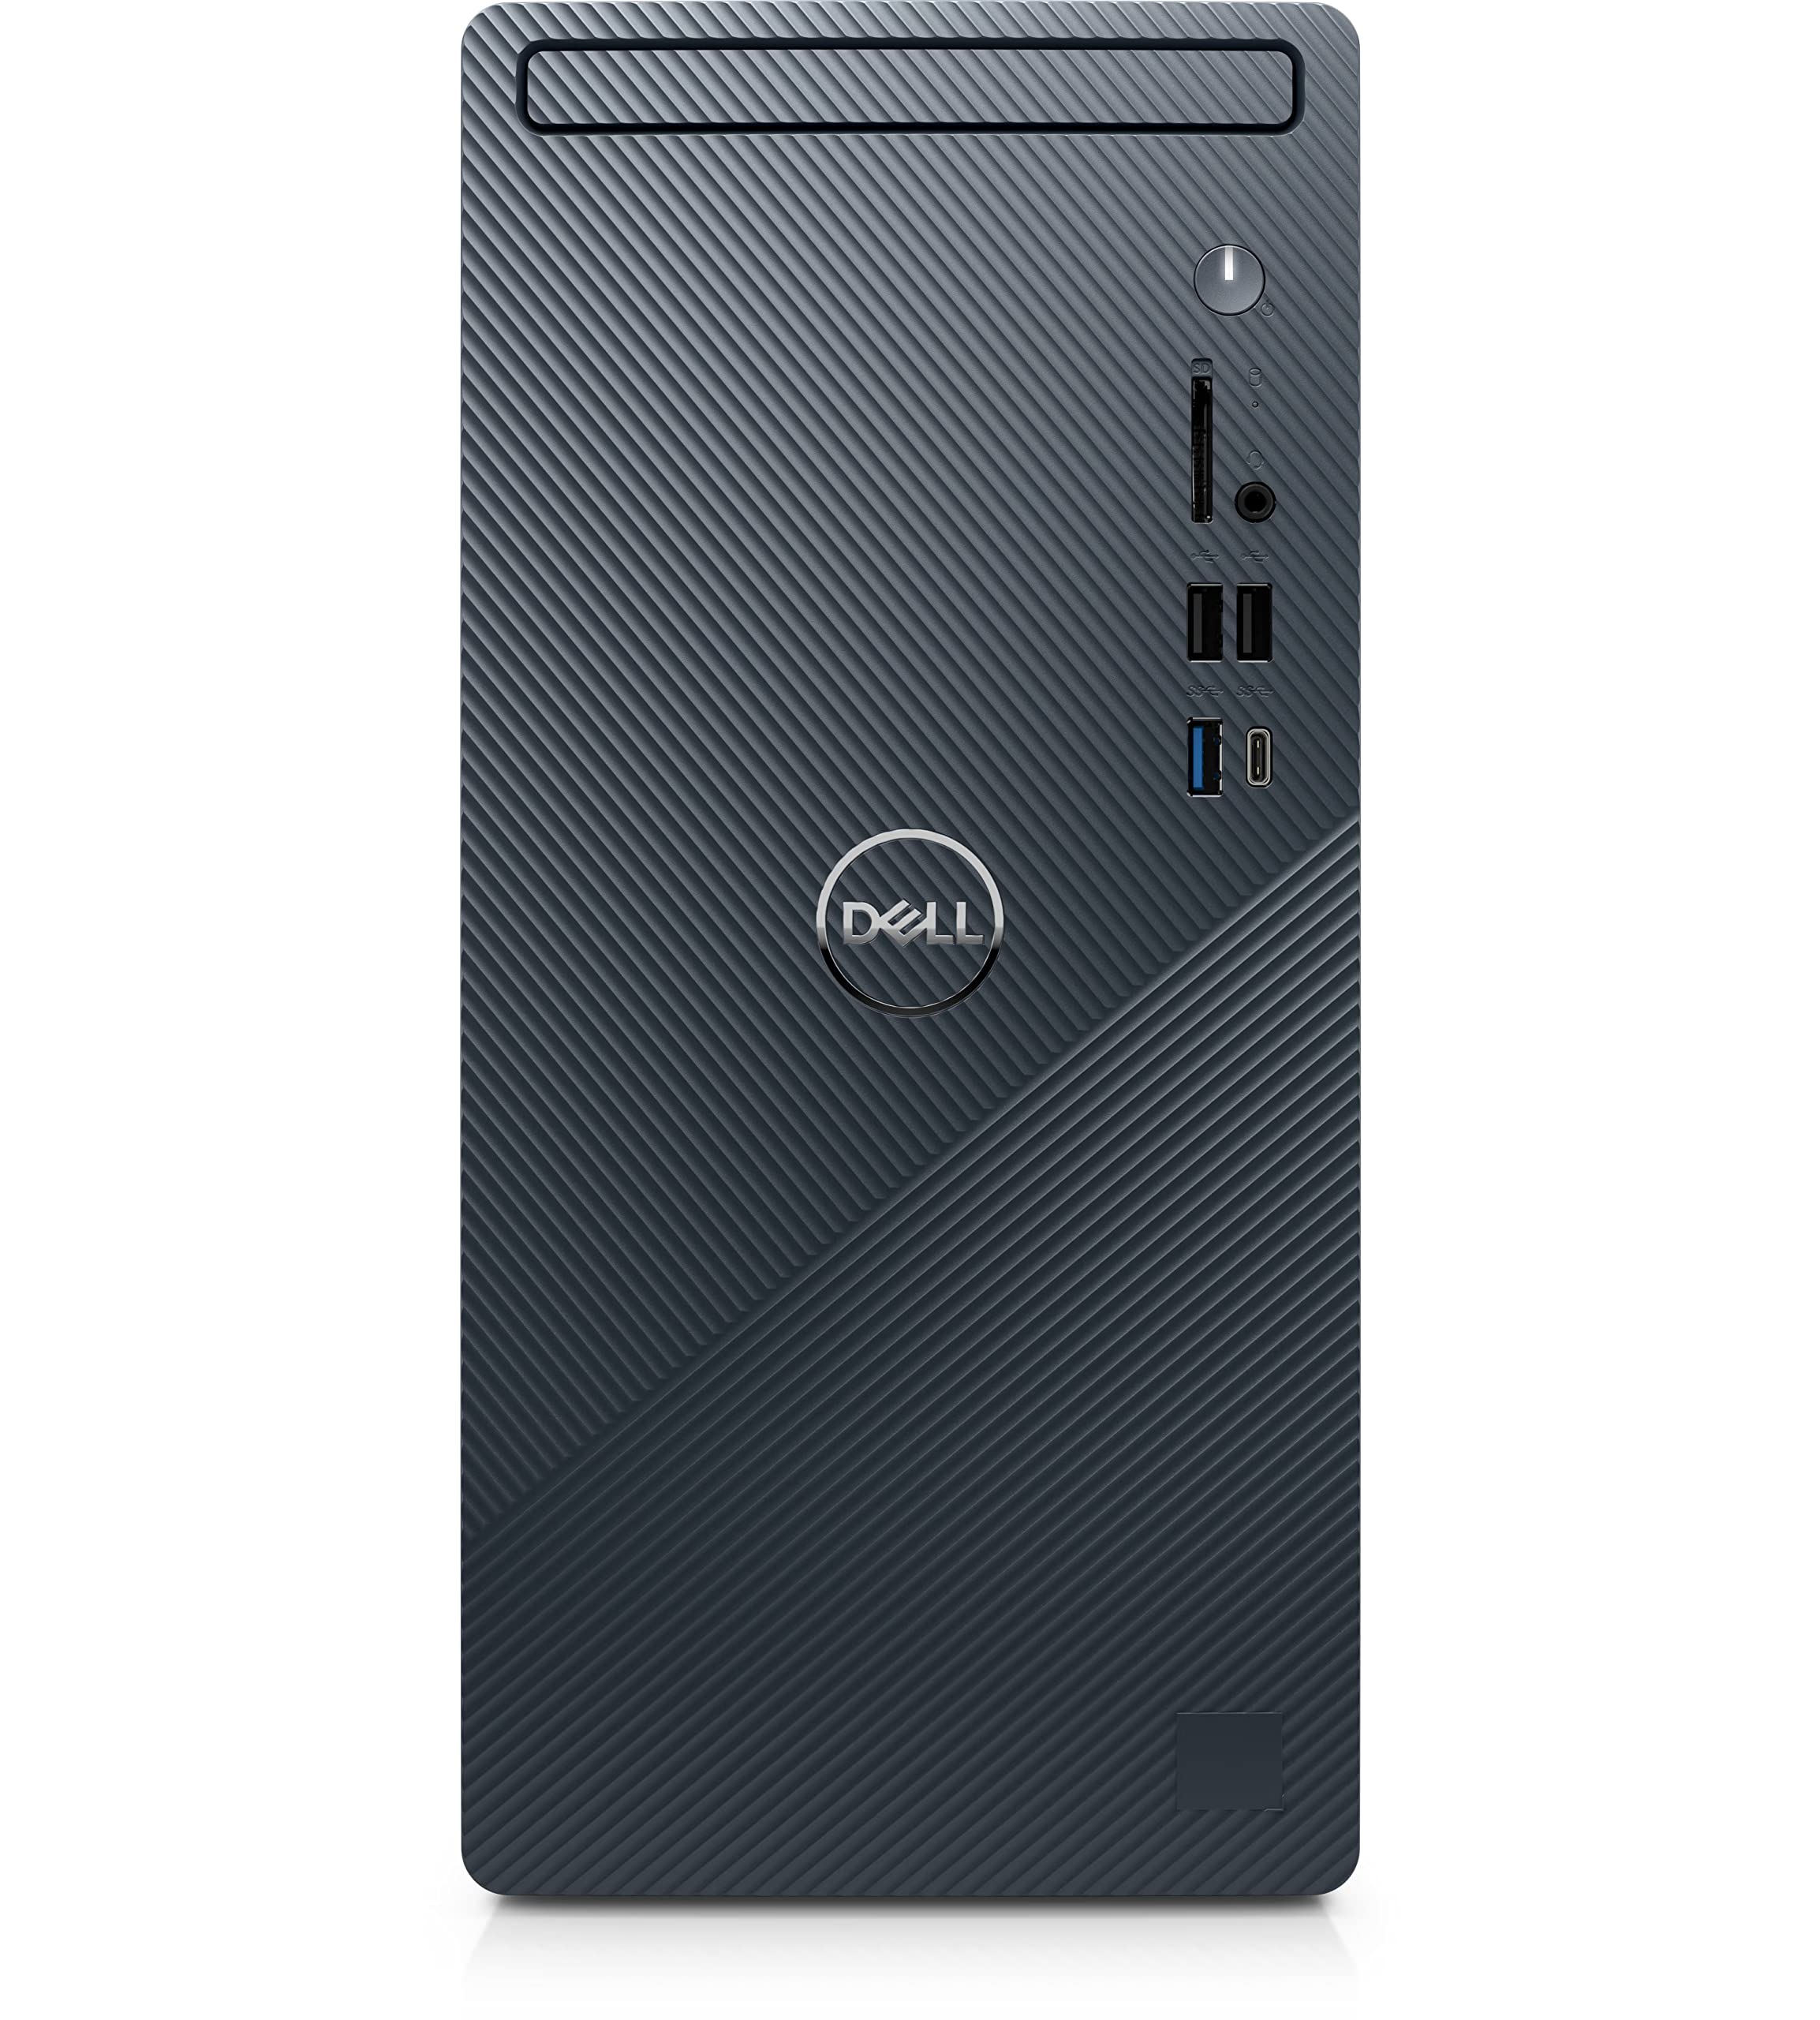 Dell Inspiron 3020 Tower Desktop Computer - 13th Gen Intel Core i5-13400 10-Core up to 4.60 GHz Processor, 16GB DDR4 RAM, 512GB NVMe SSD, Intel UHD Graphics 730, DVD+RW, Windows 11 Home